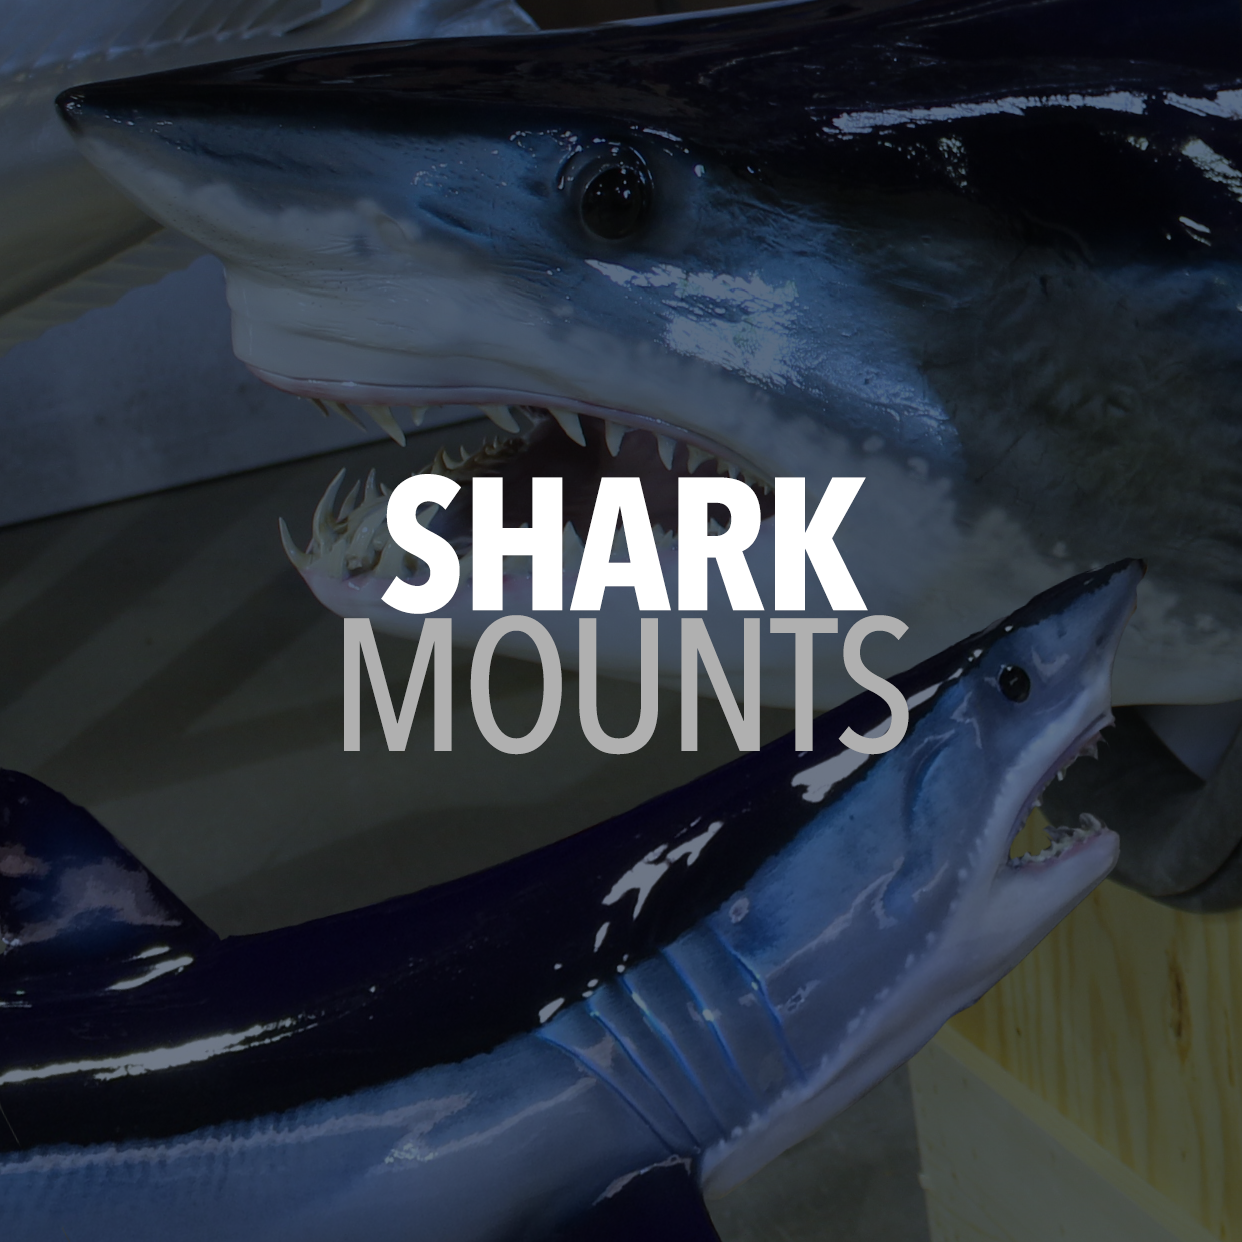 Shark Mounts graphic